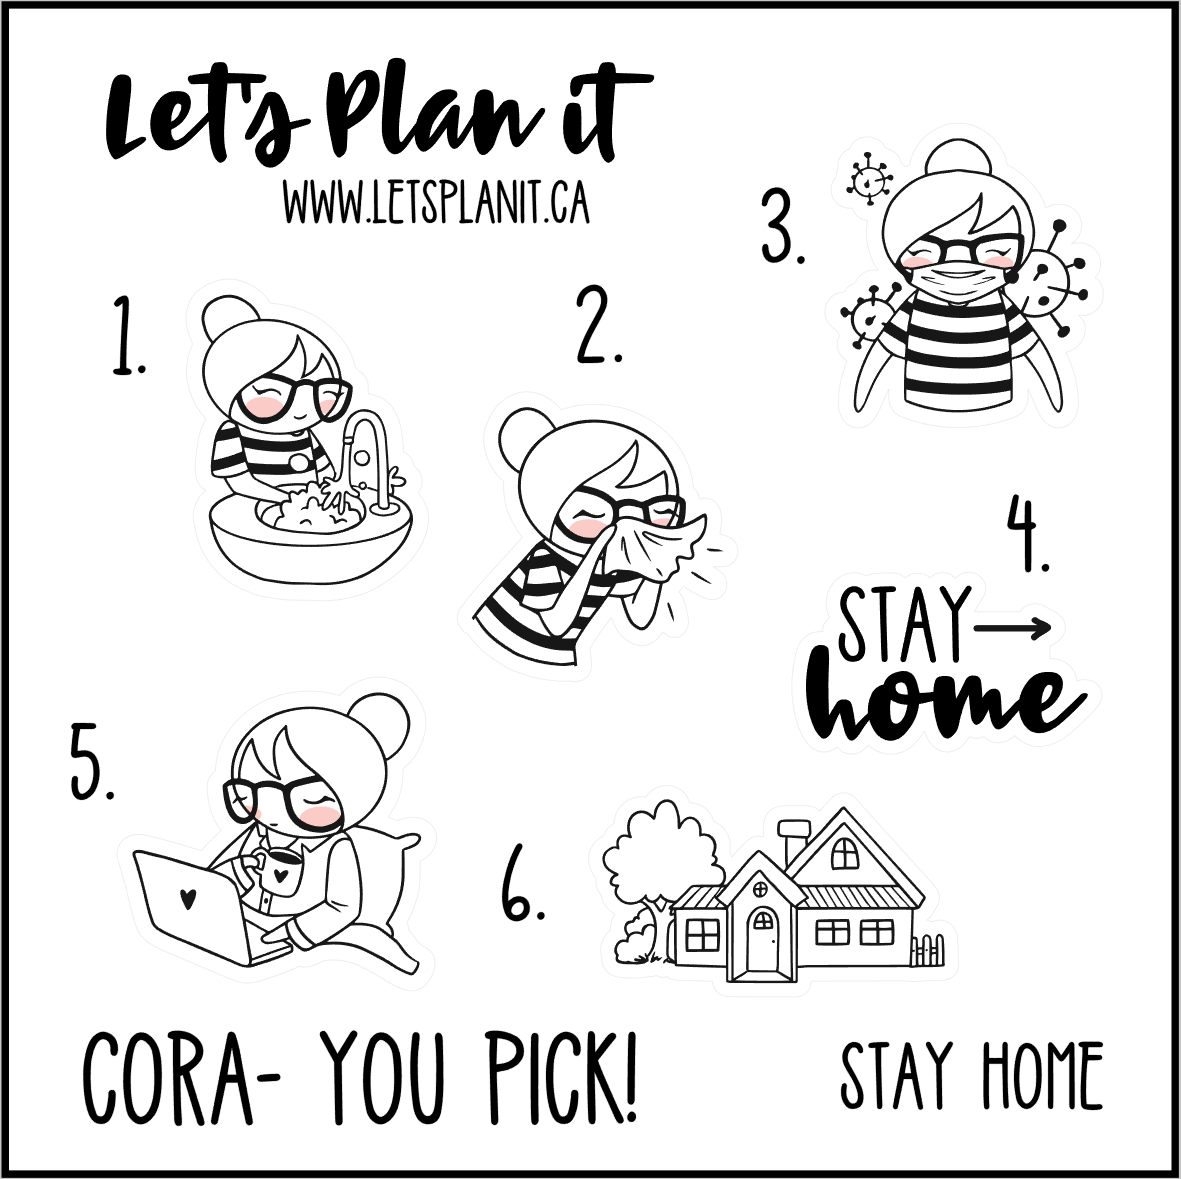 Cora-u-pick- Stay Home